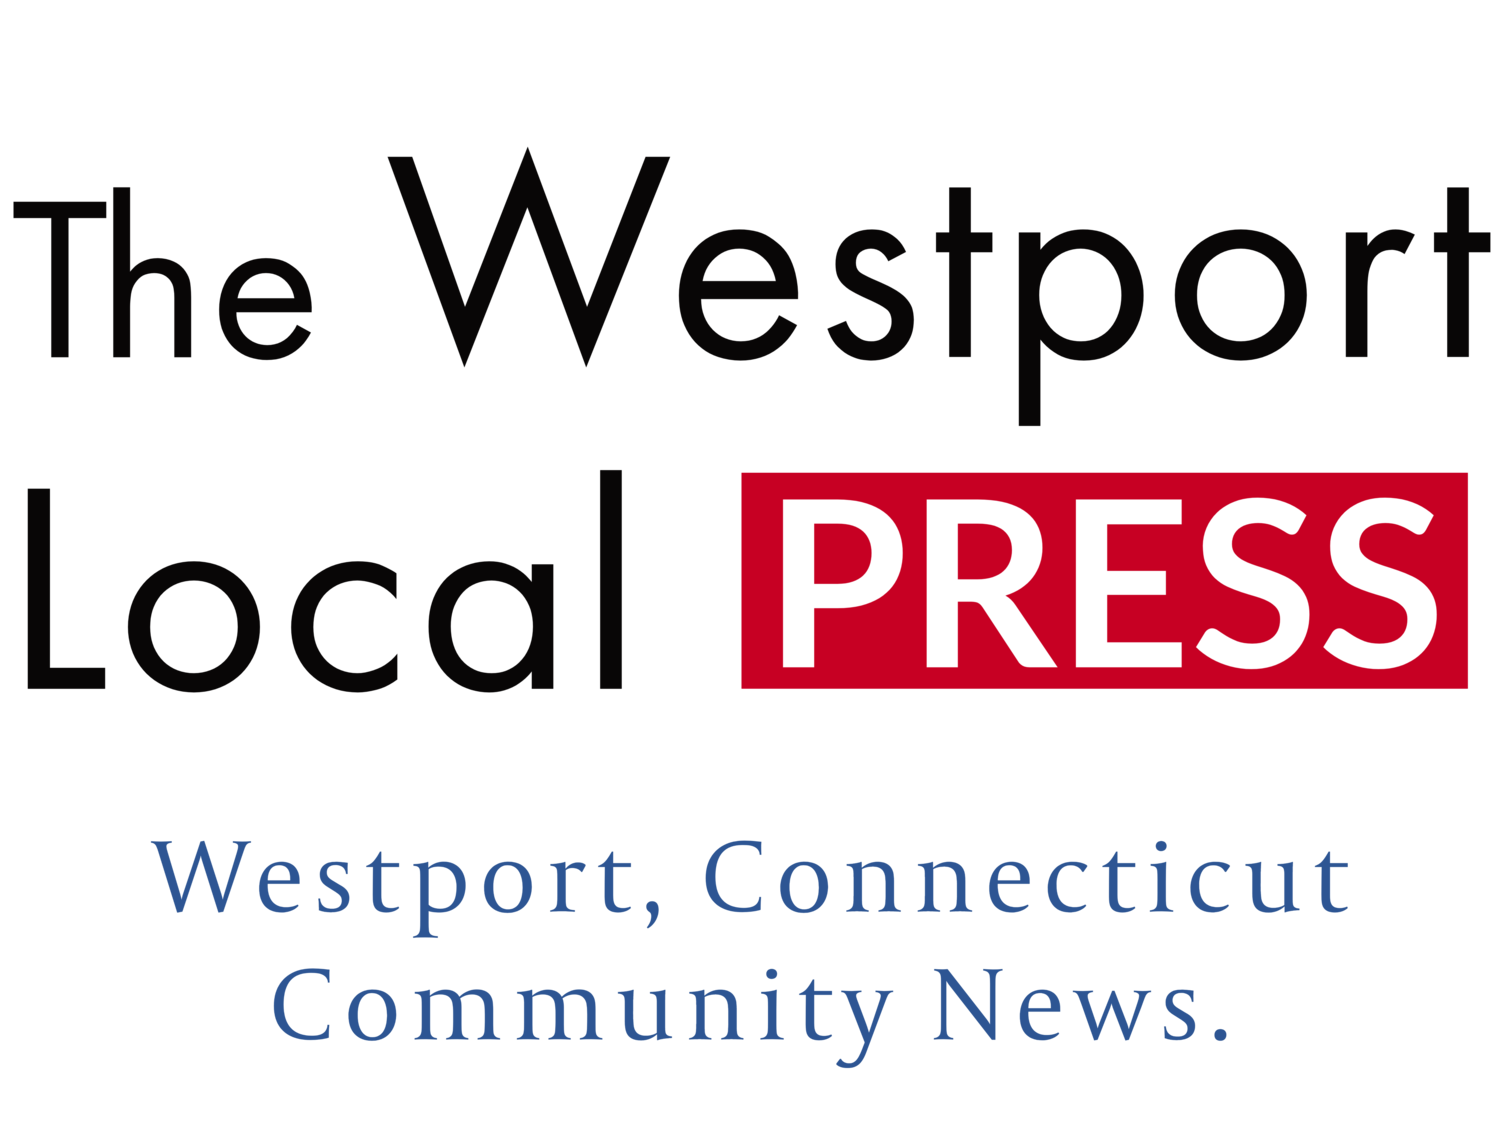 The Westport Local Press